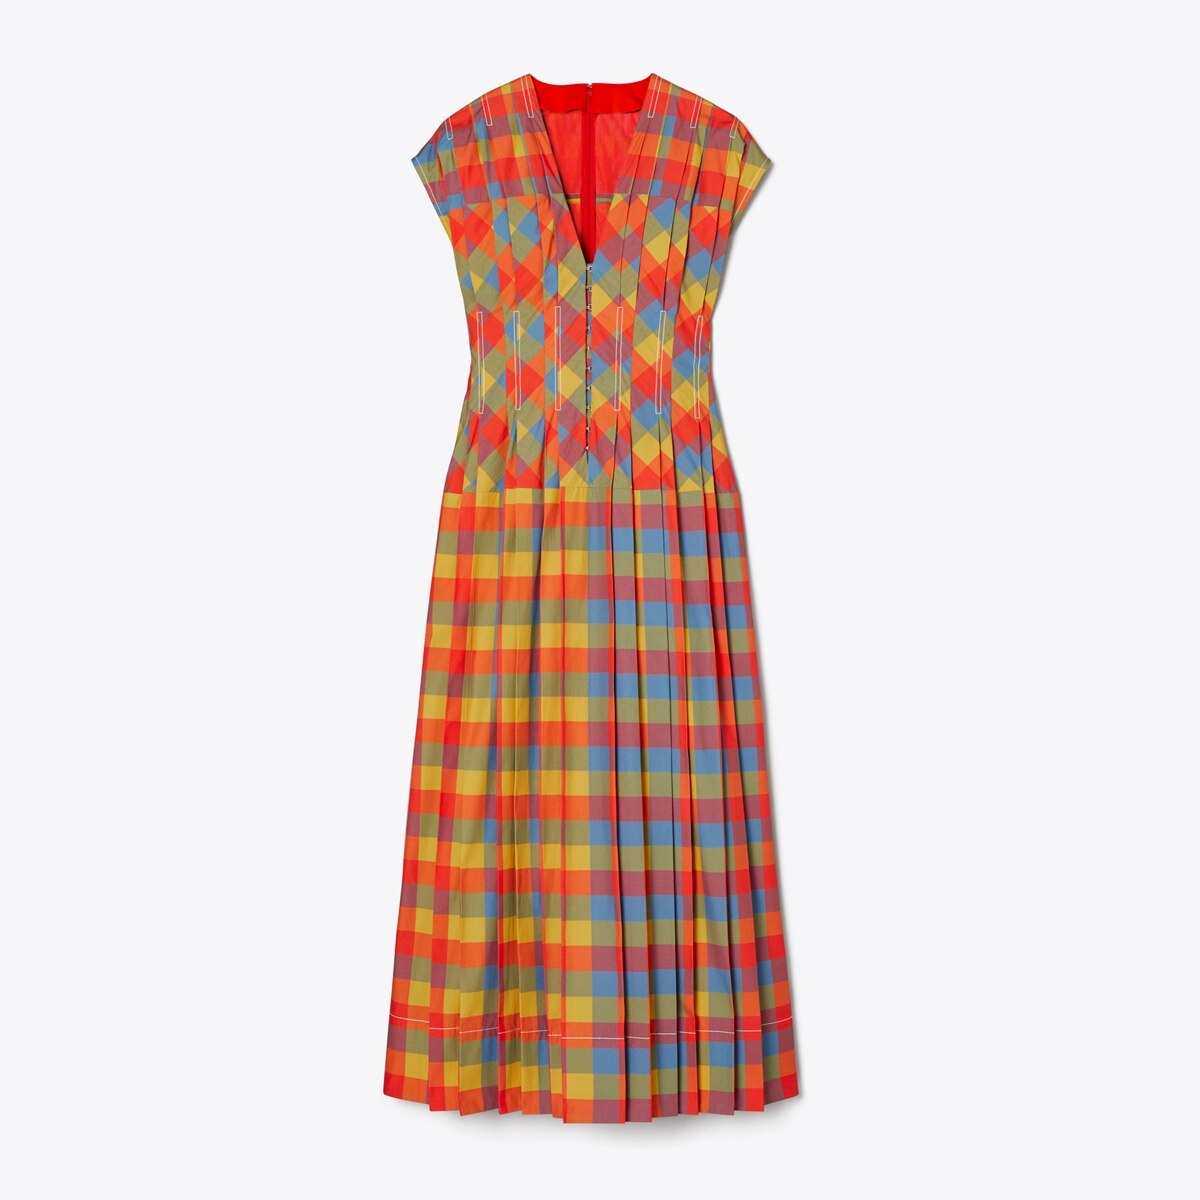 Veronica Plaid Claire McCardell Dress: Women's Designer Dresses | Tory Burch